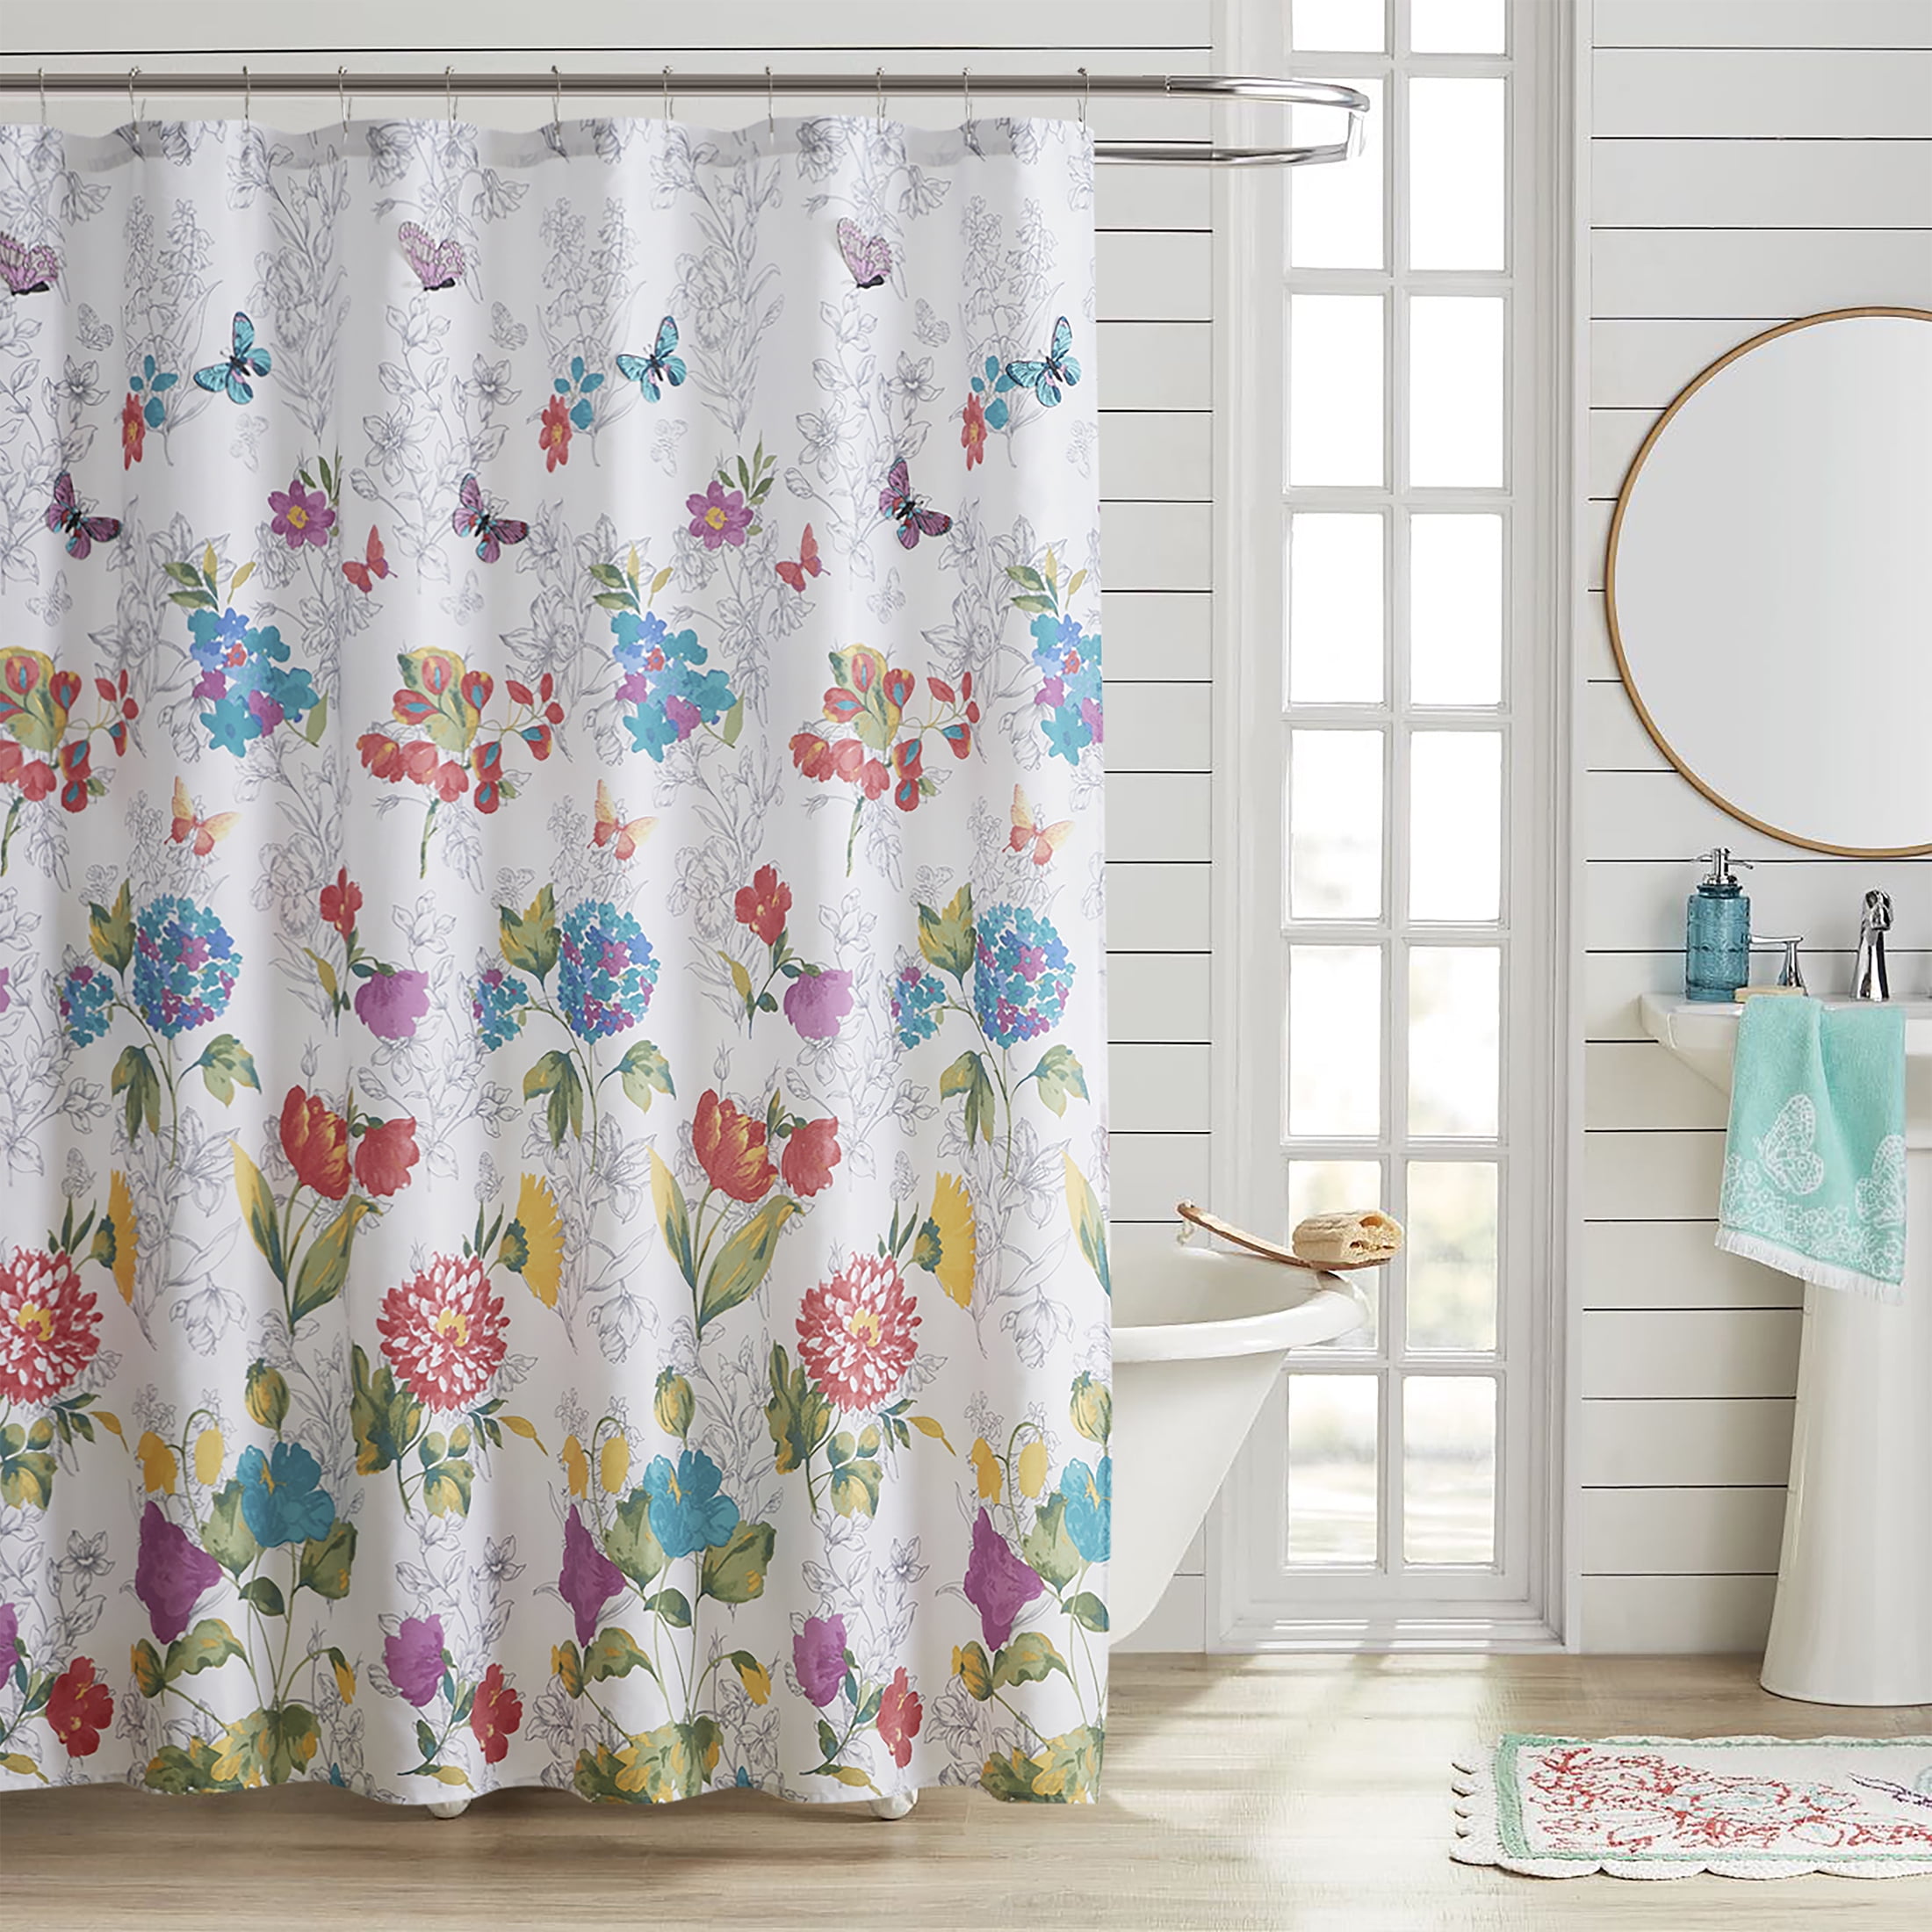 Birds Pink Flamingo Polyester Fabric Shower Curtain Set Bathroom Decor 71Inch 